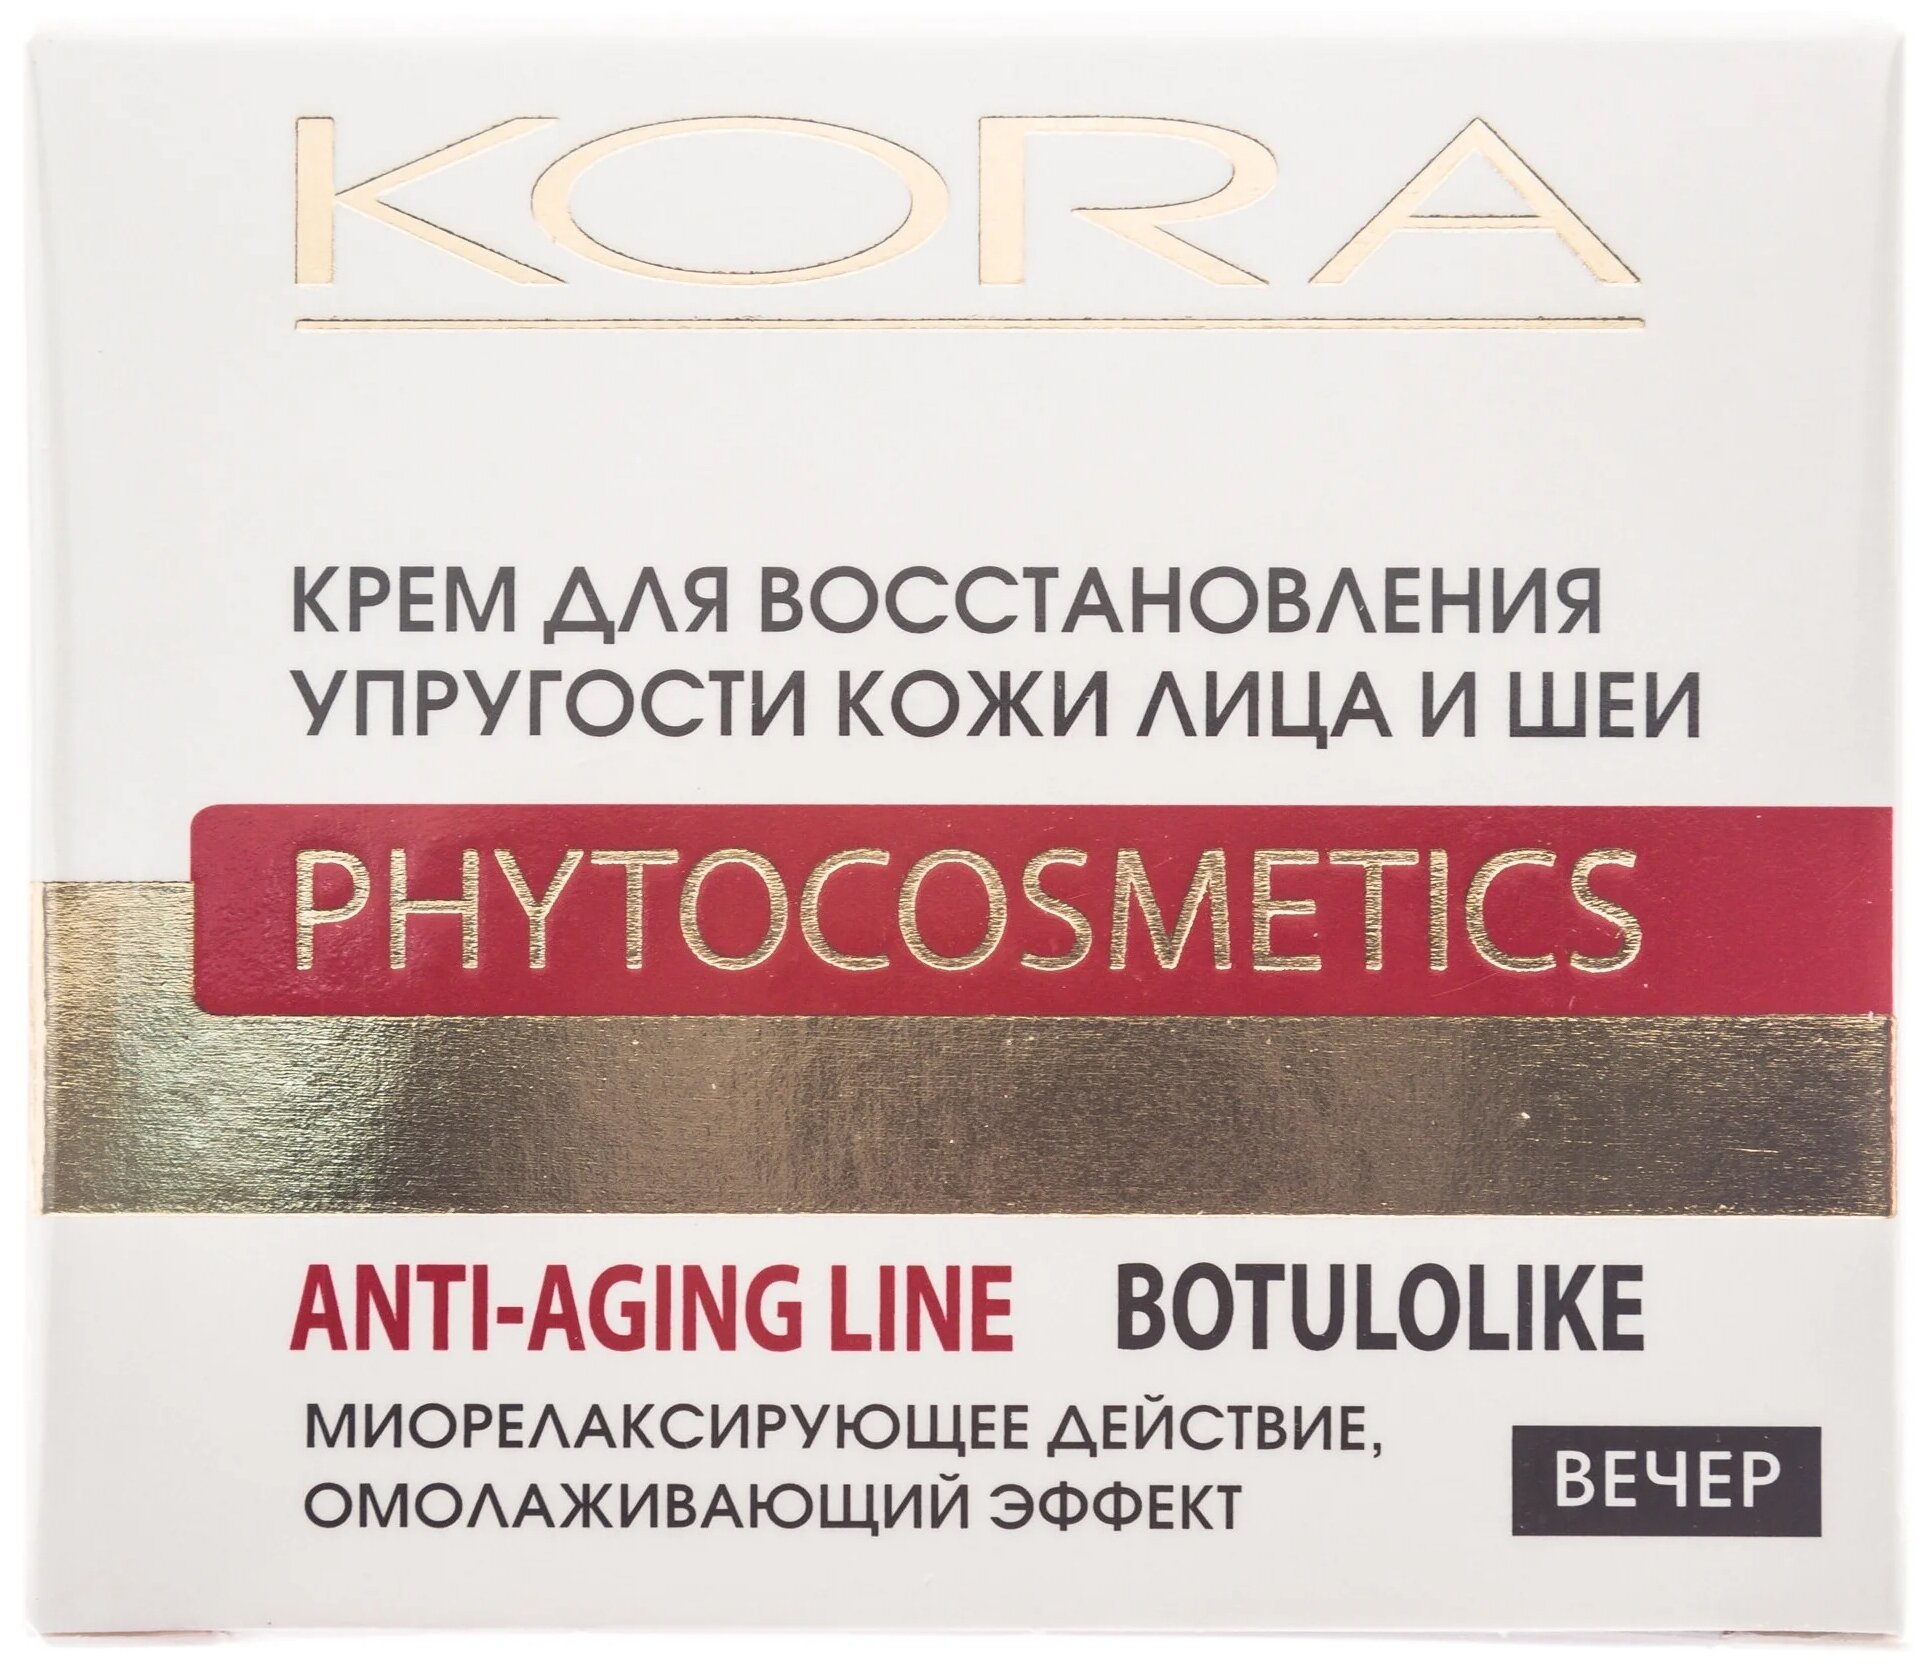 Phytocosmetics Anti-Aging Line Botulolike крем для восстановления упругости кожи лица и шеи, 50 мл